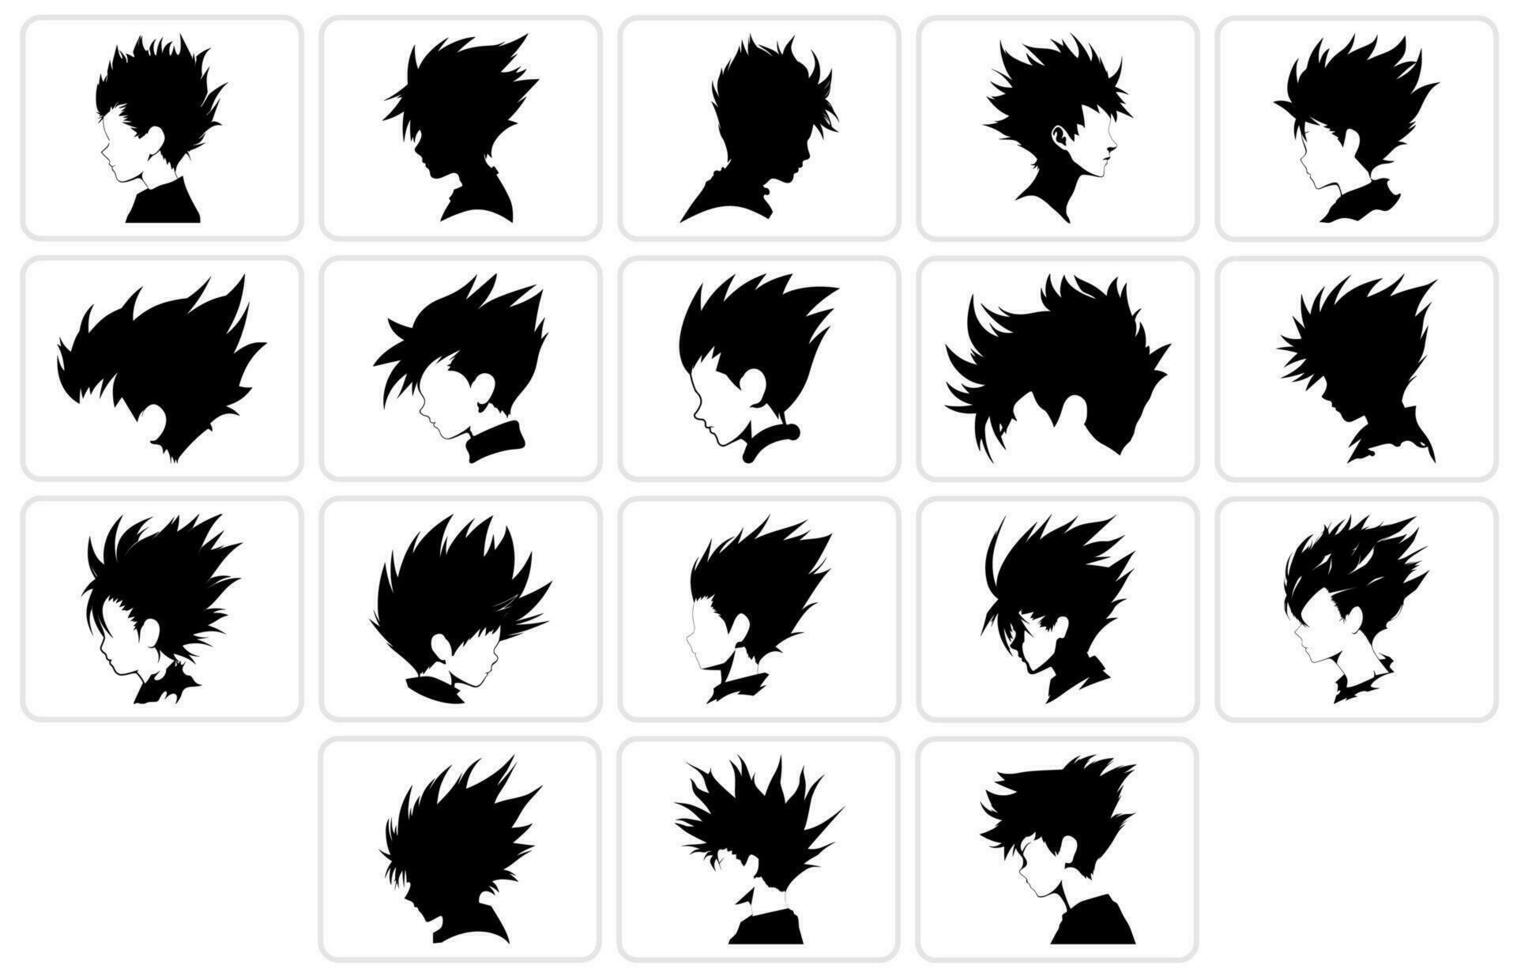 Spiky hair Silhouettes illustration Set,  Boy's hair silhouette Vector collection, men's silhouette bundle